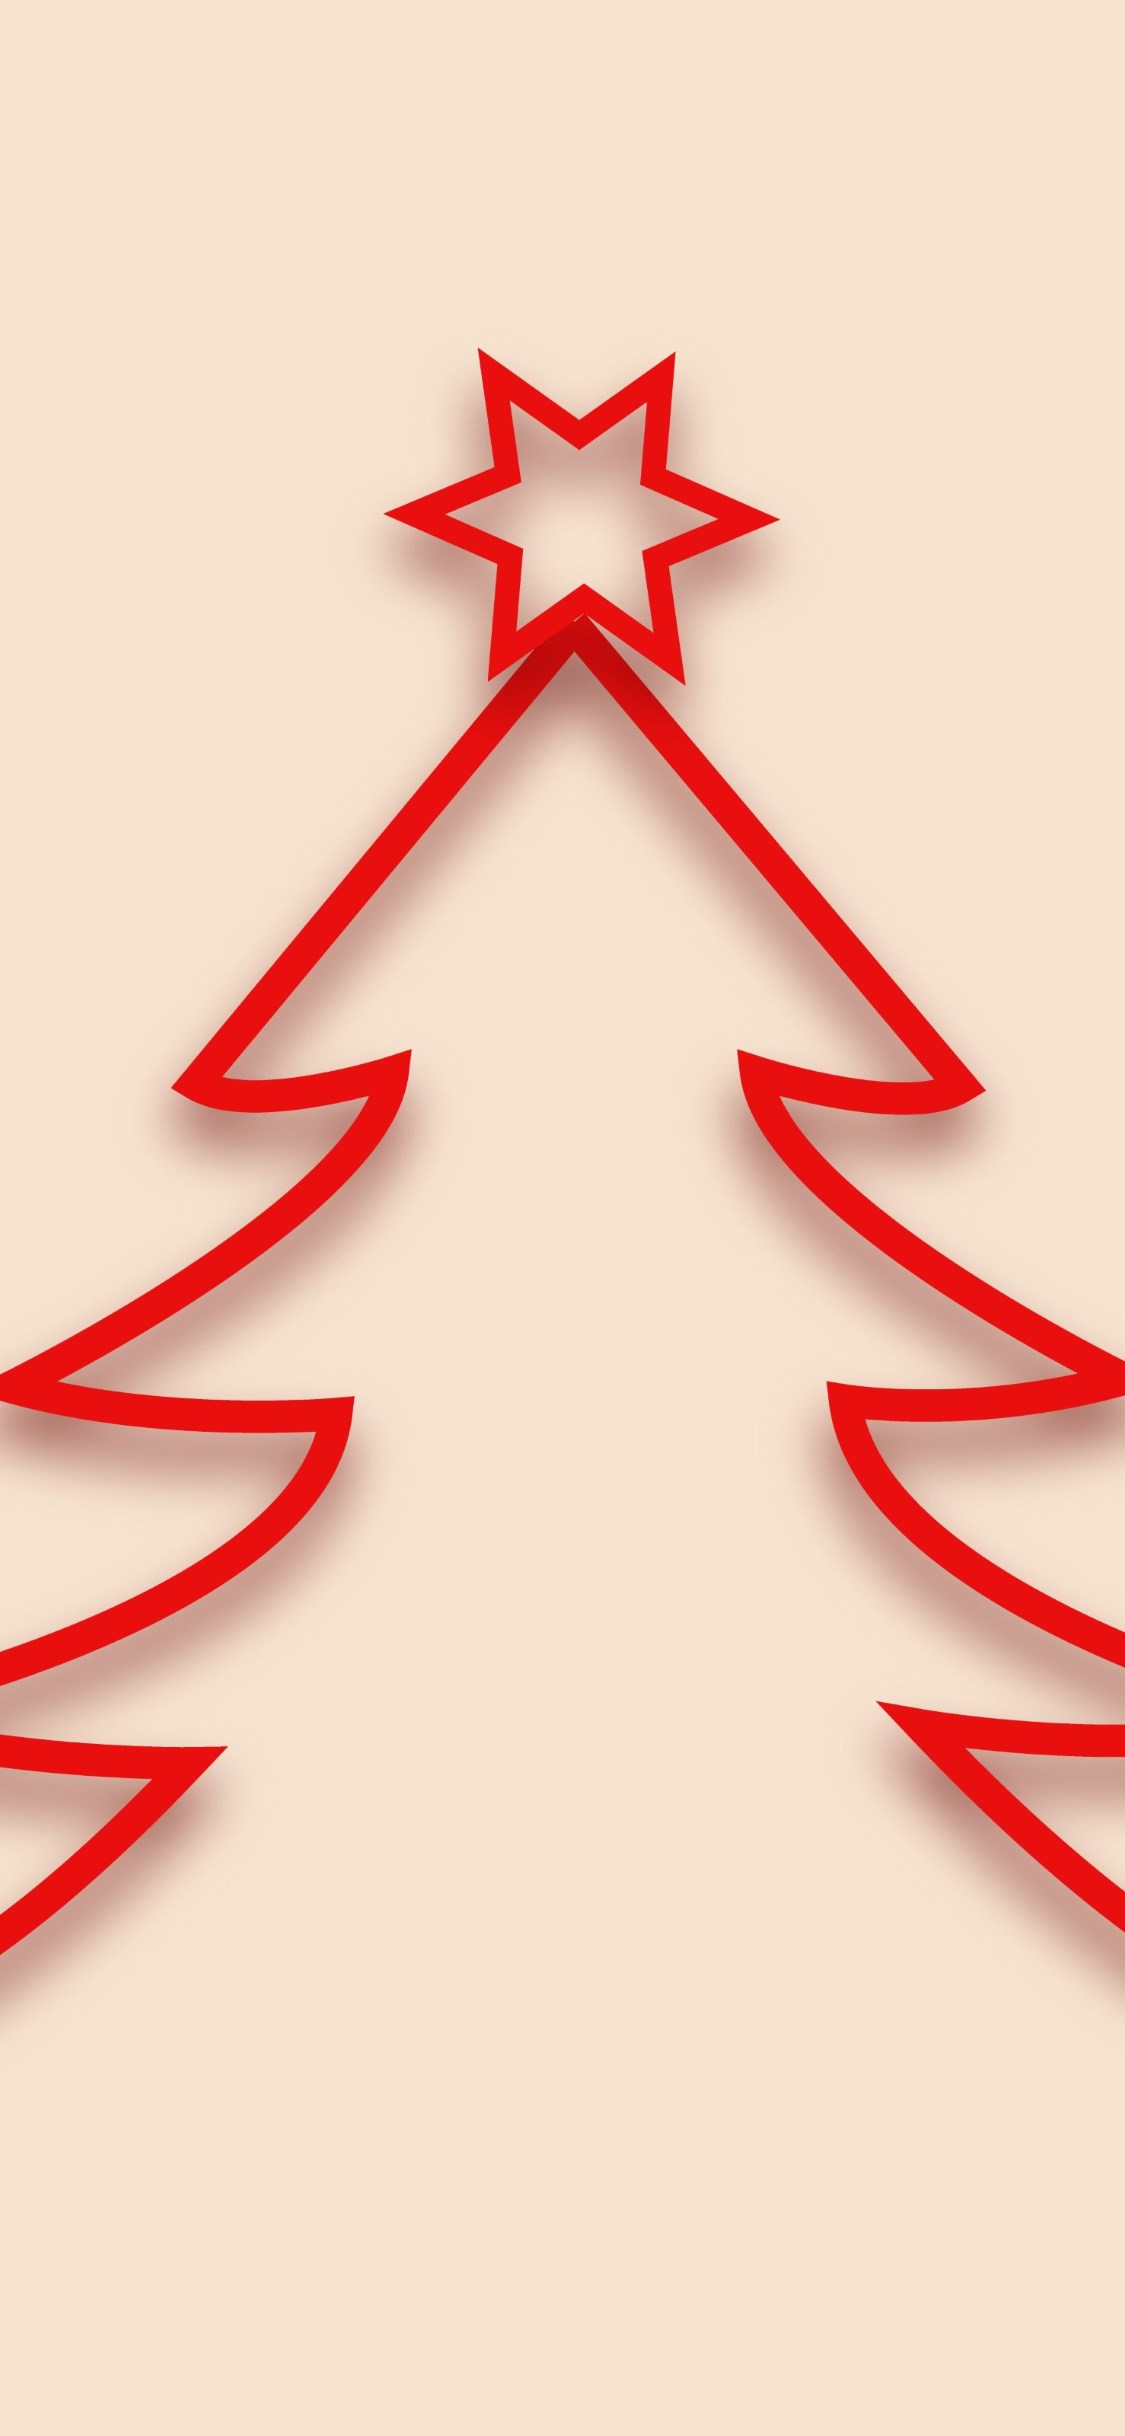 Red minimalistic Christmas tree design wallpaper 1125x2436